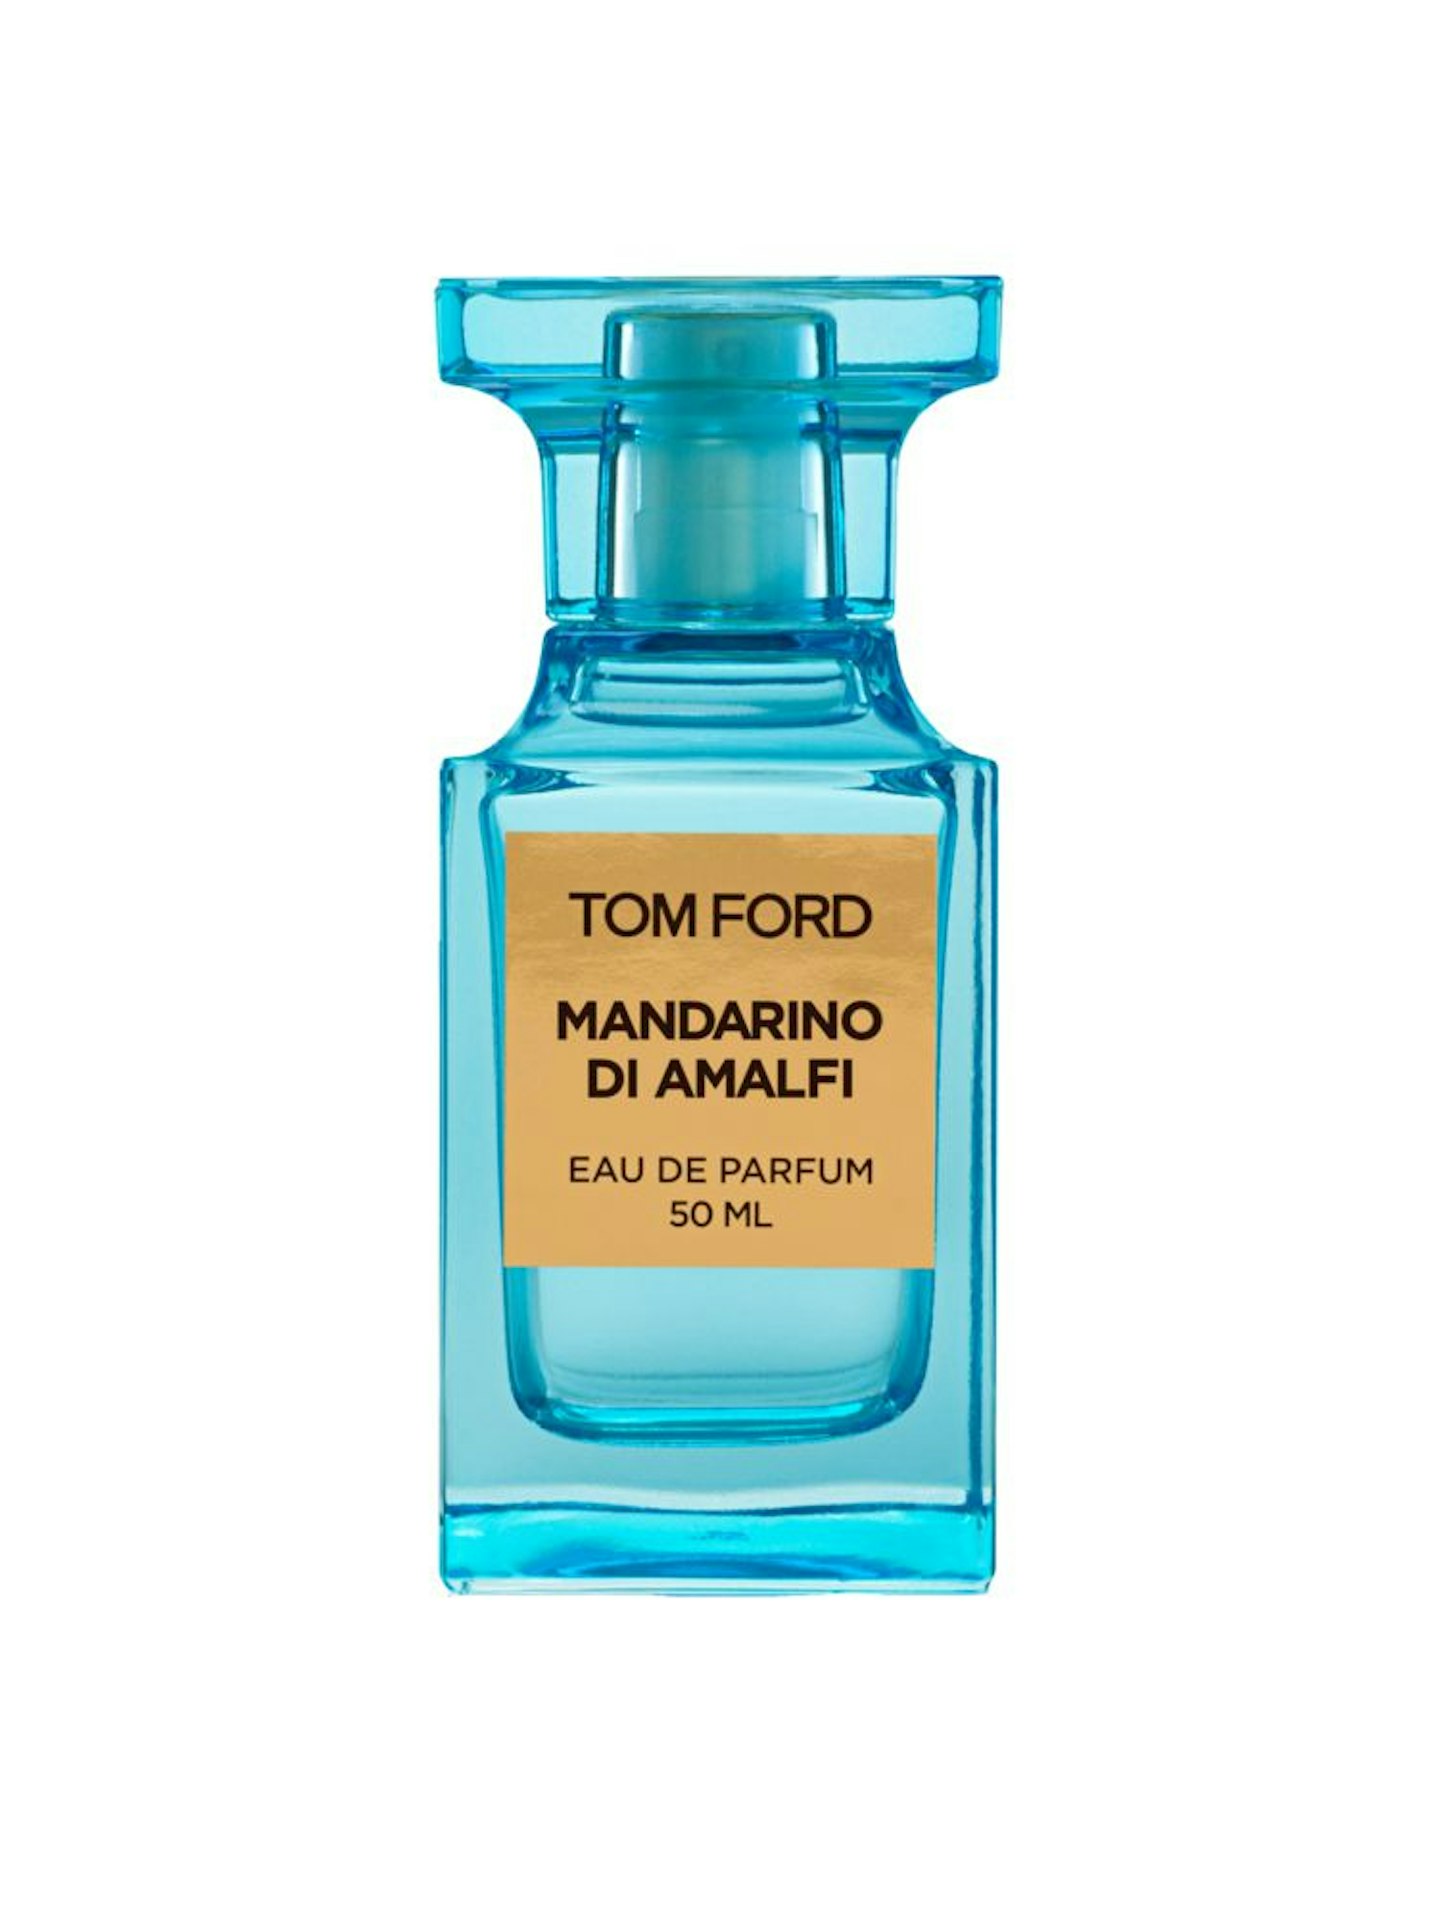 Tom Ford Mandarino Di Amalfi, £162 for 50ml